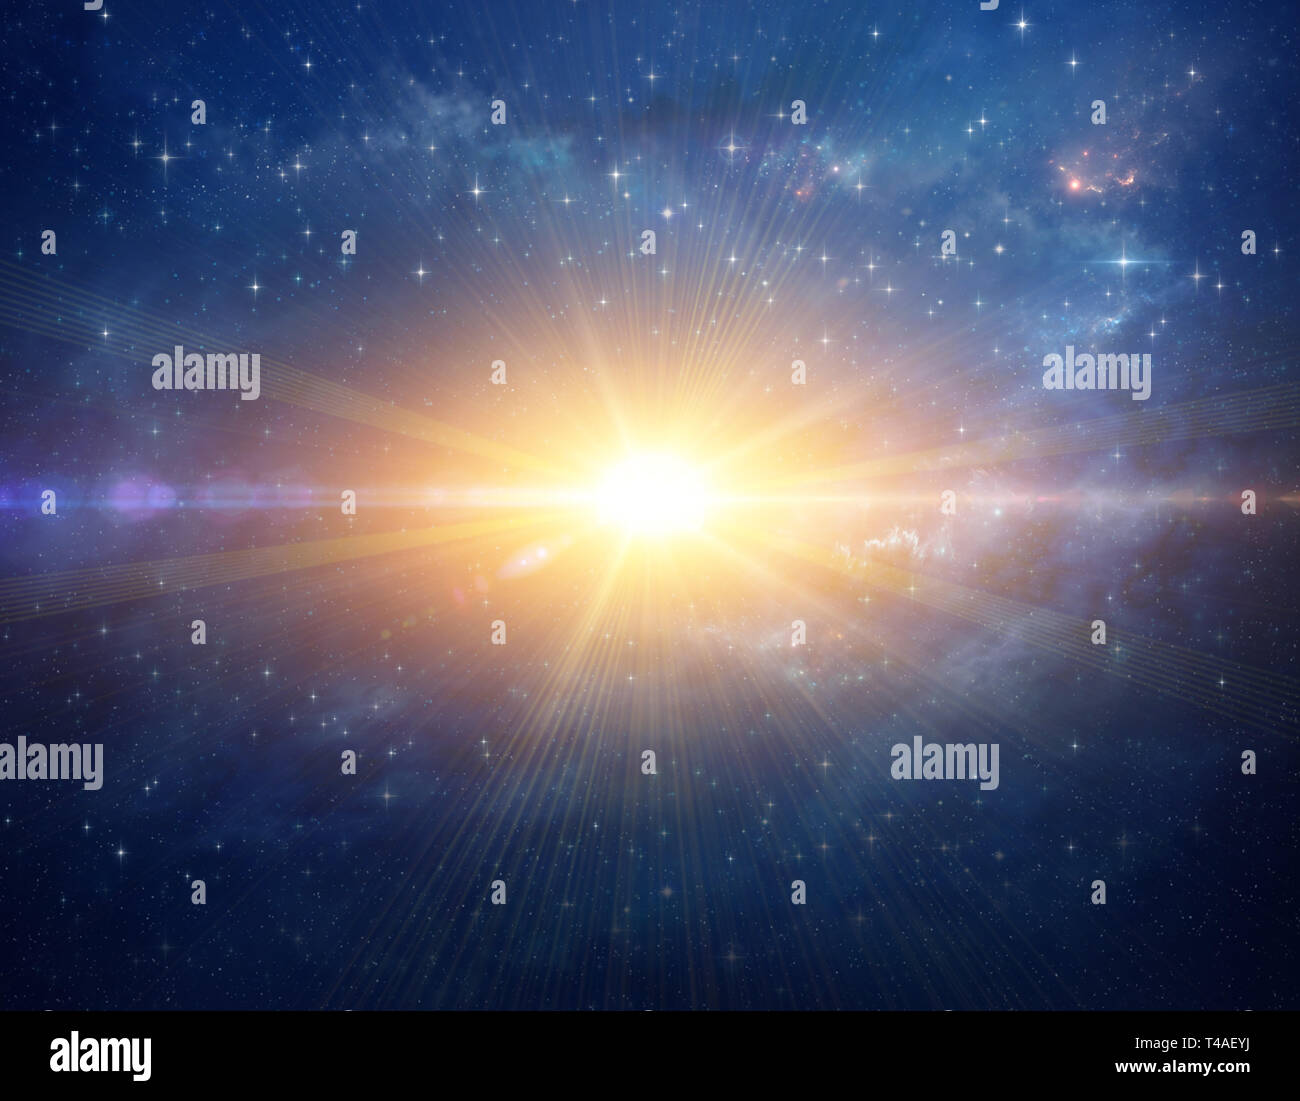 Stellar explosion shining in deep space, cosmic star blast in Universe. High resolution galaxy background. Stock Photo